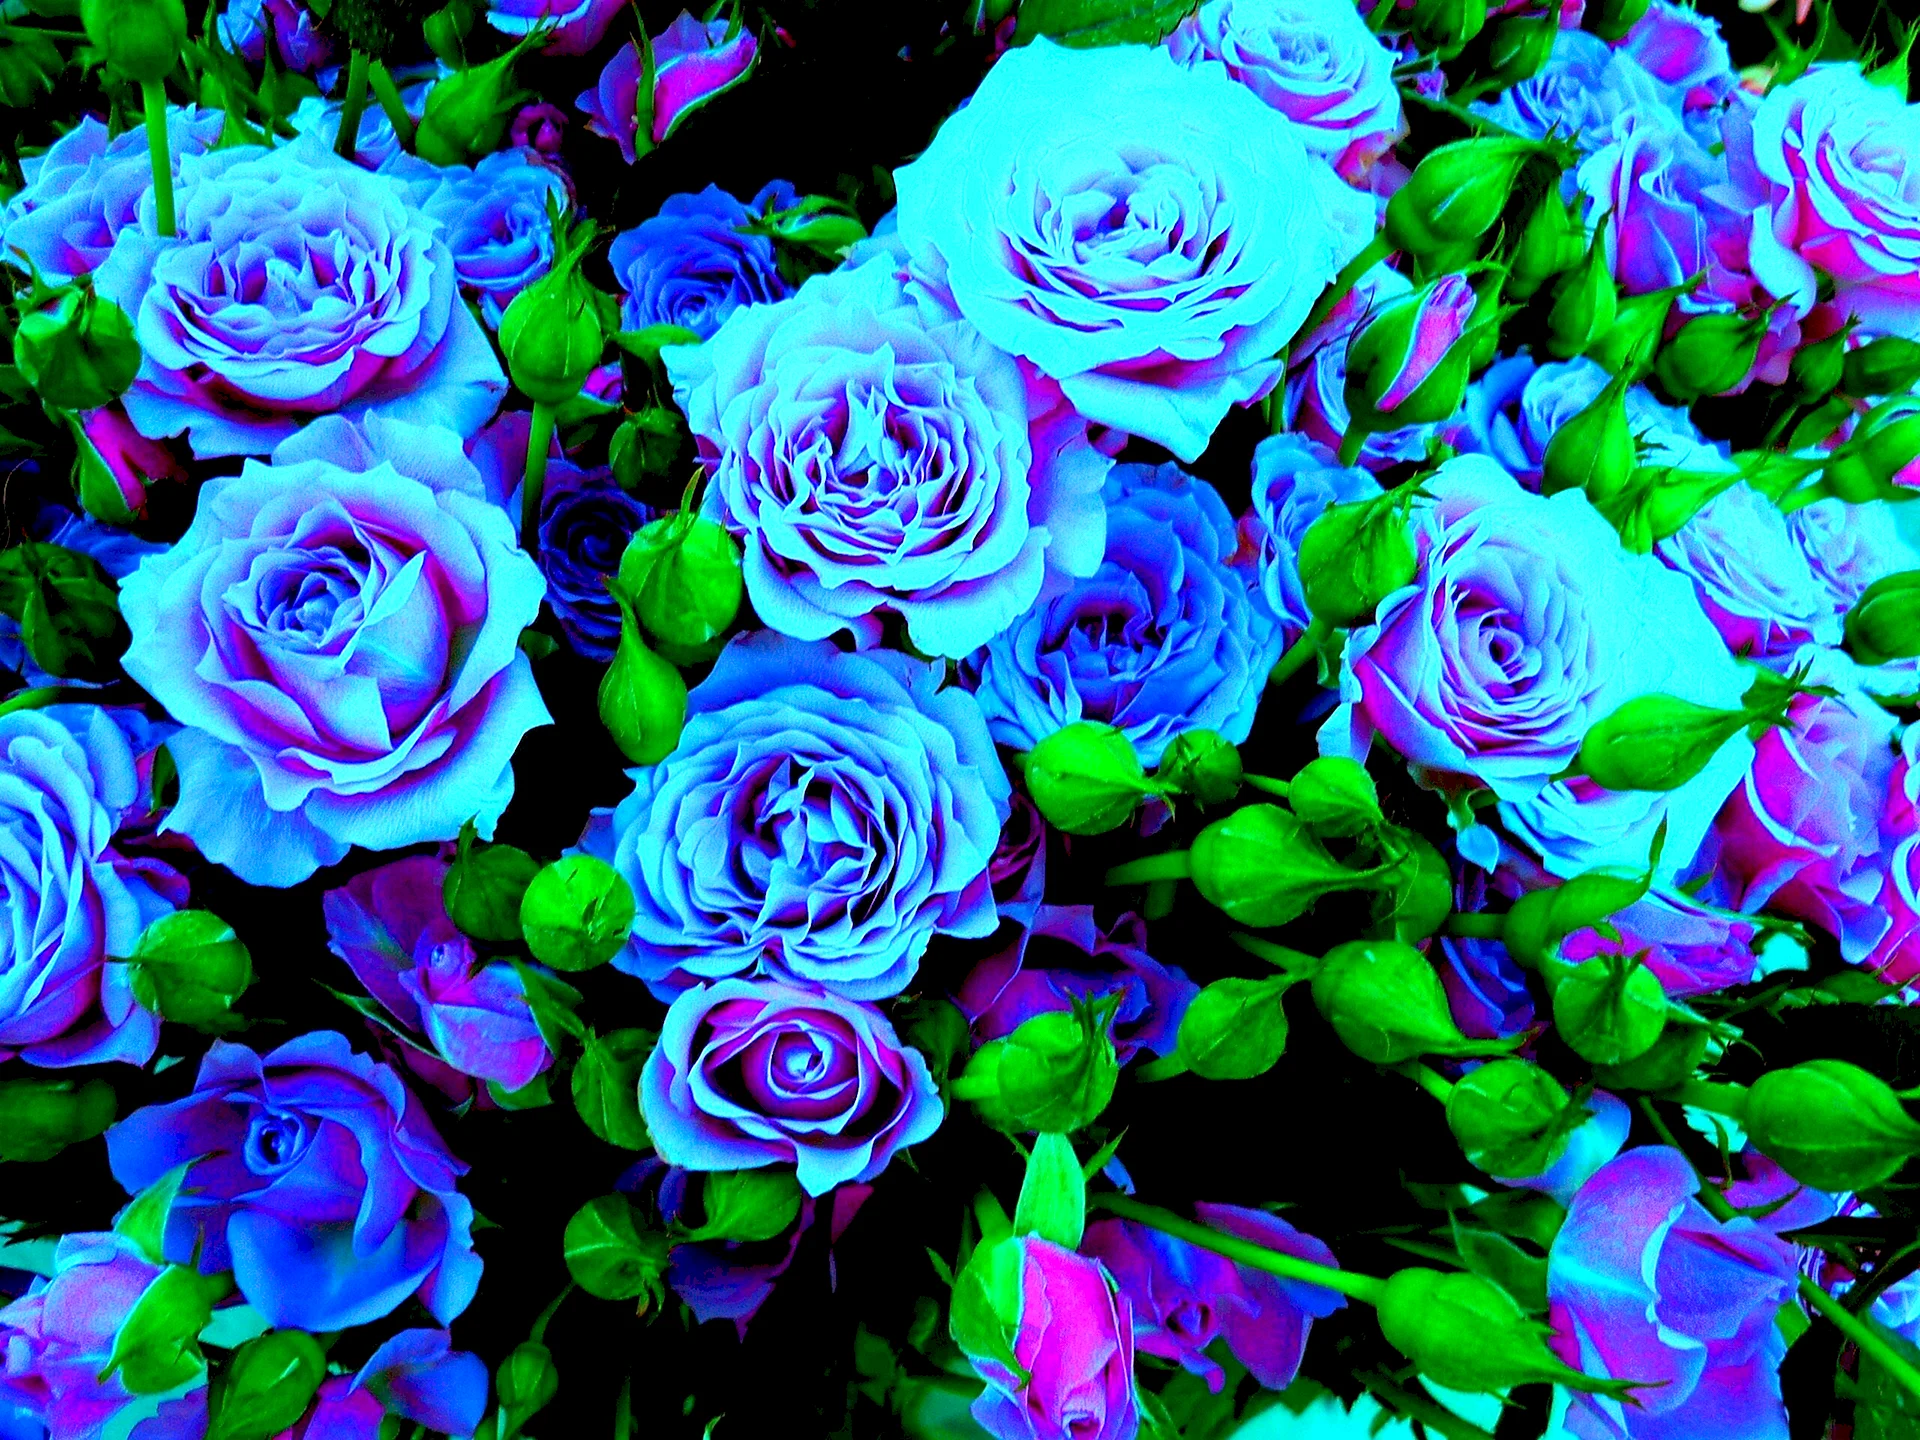 Синяя роза Беккер